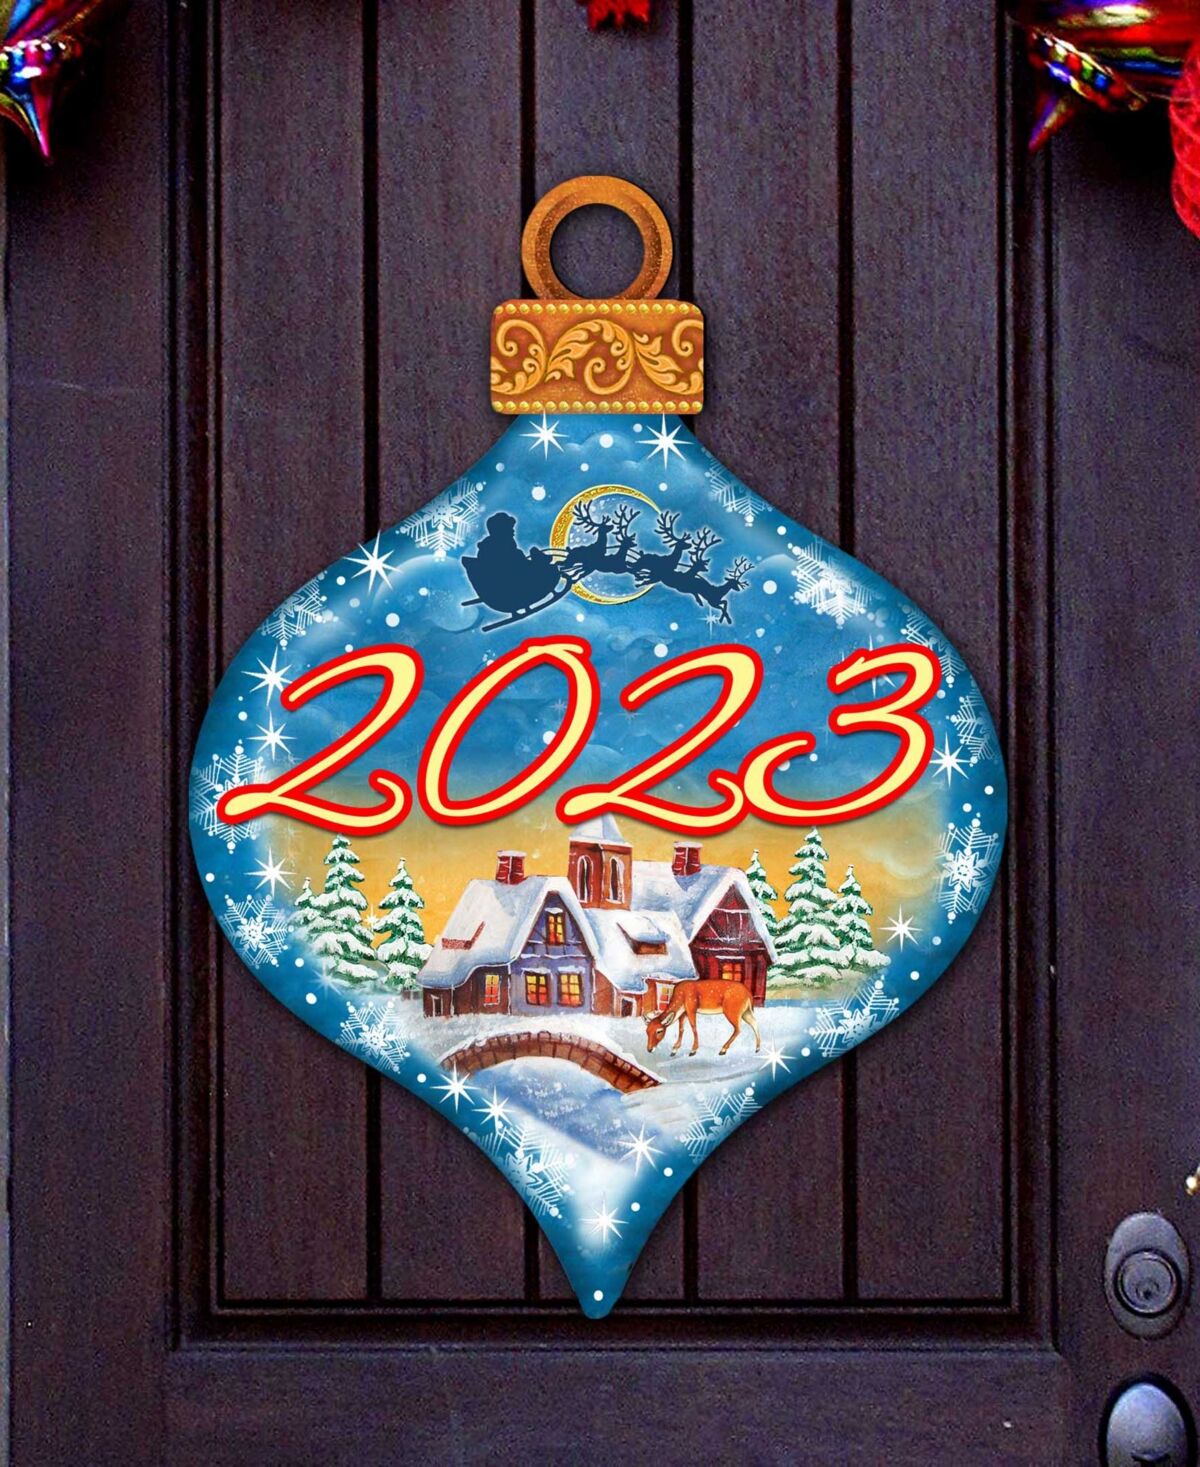 Designocracy 2023 Dated Christmas Village Wooden Door Hanger Wall Decor G. DeBrekht - Multi Color